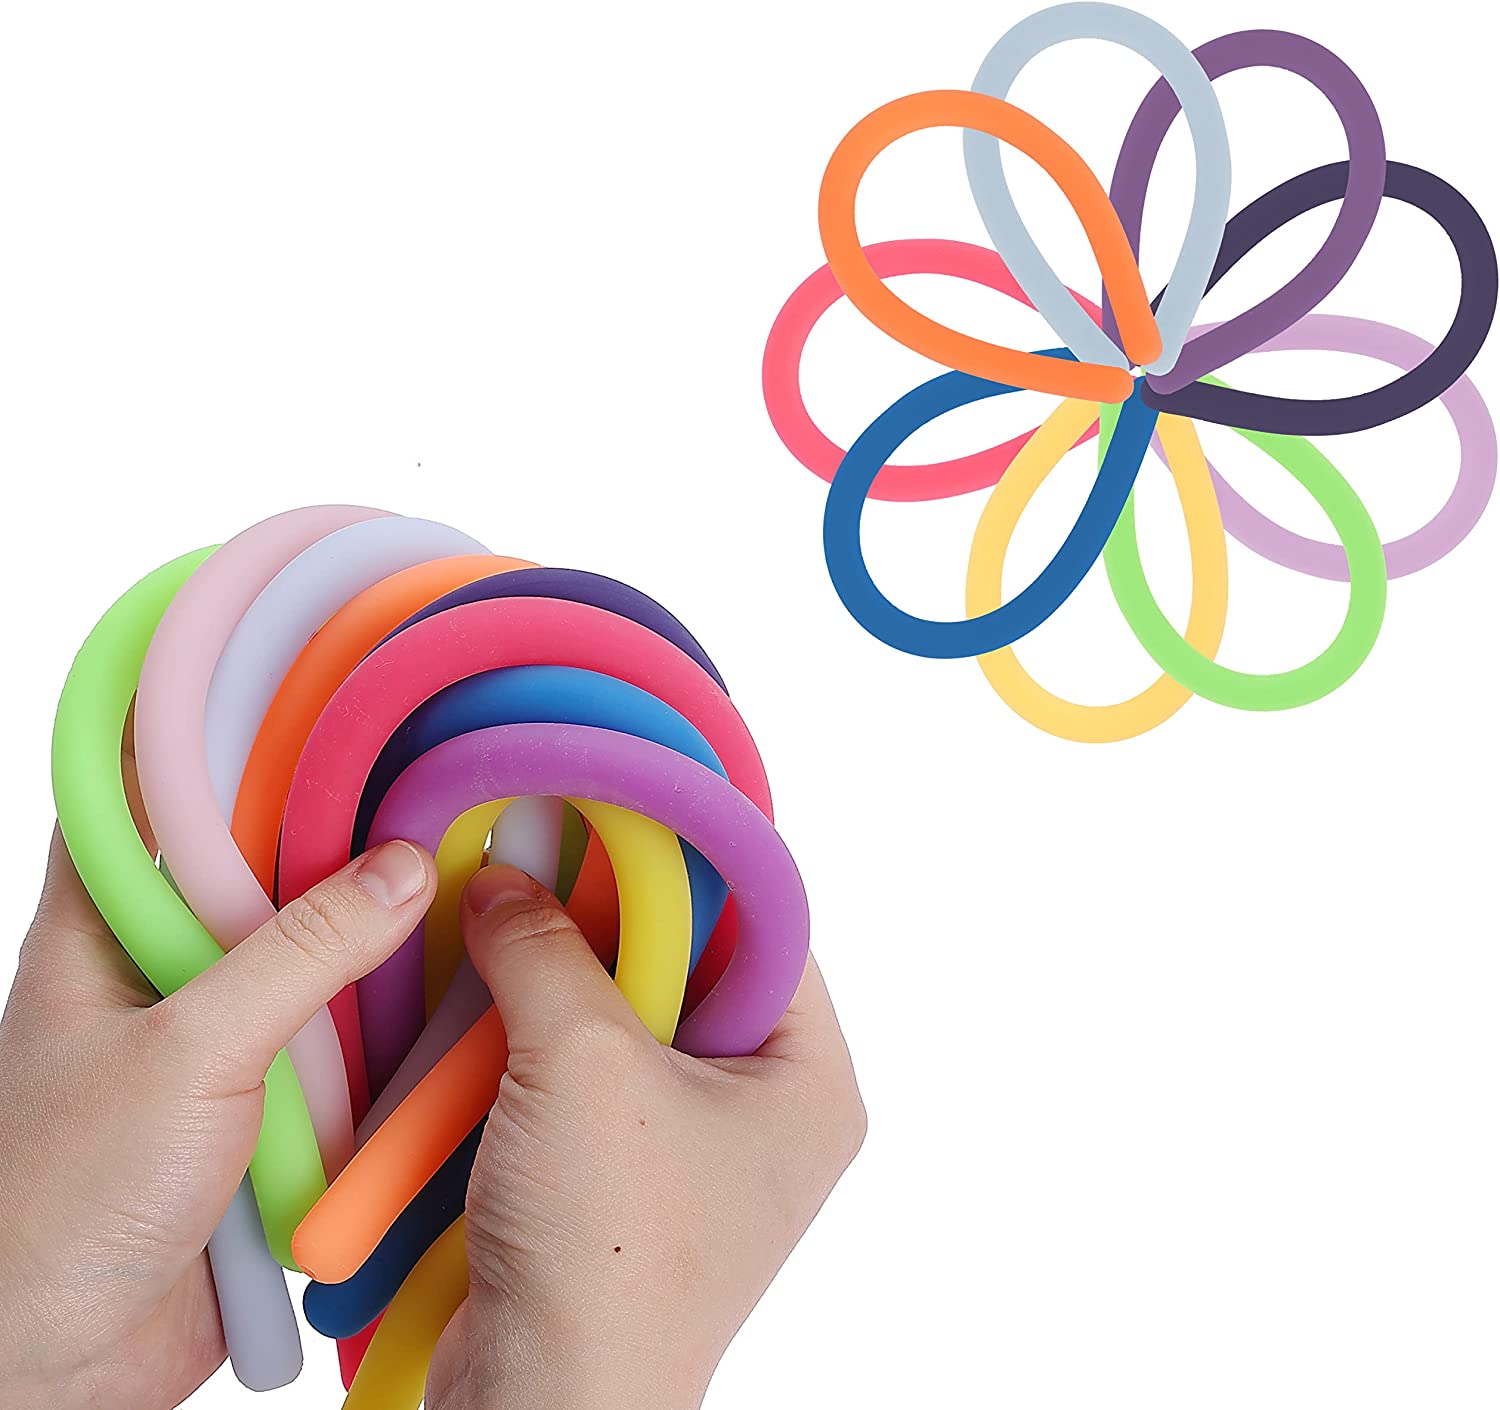 JA-RU Squeeze Caterpillar (12 Packs) Stretchy Rainbow Worm Squishy Toys for  Kids. Stress Relief, Therapy, Autism & ADHD Sensory Fidget Toys, Bulk